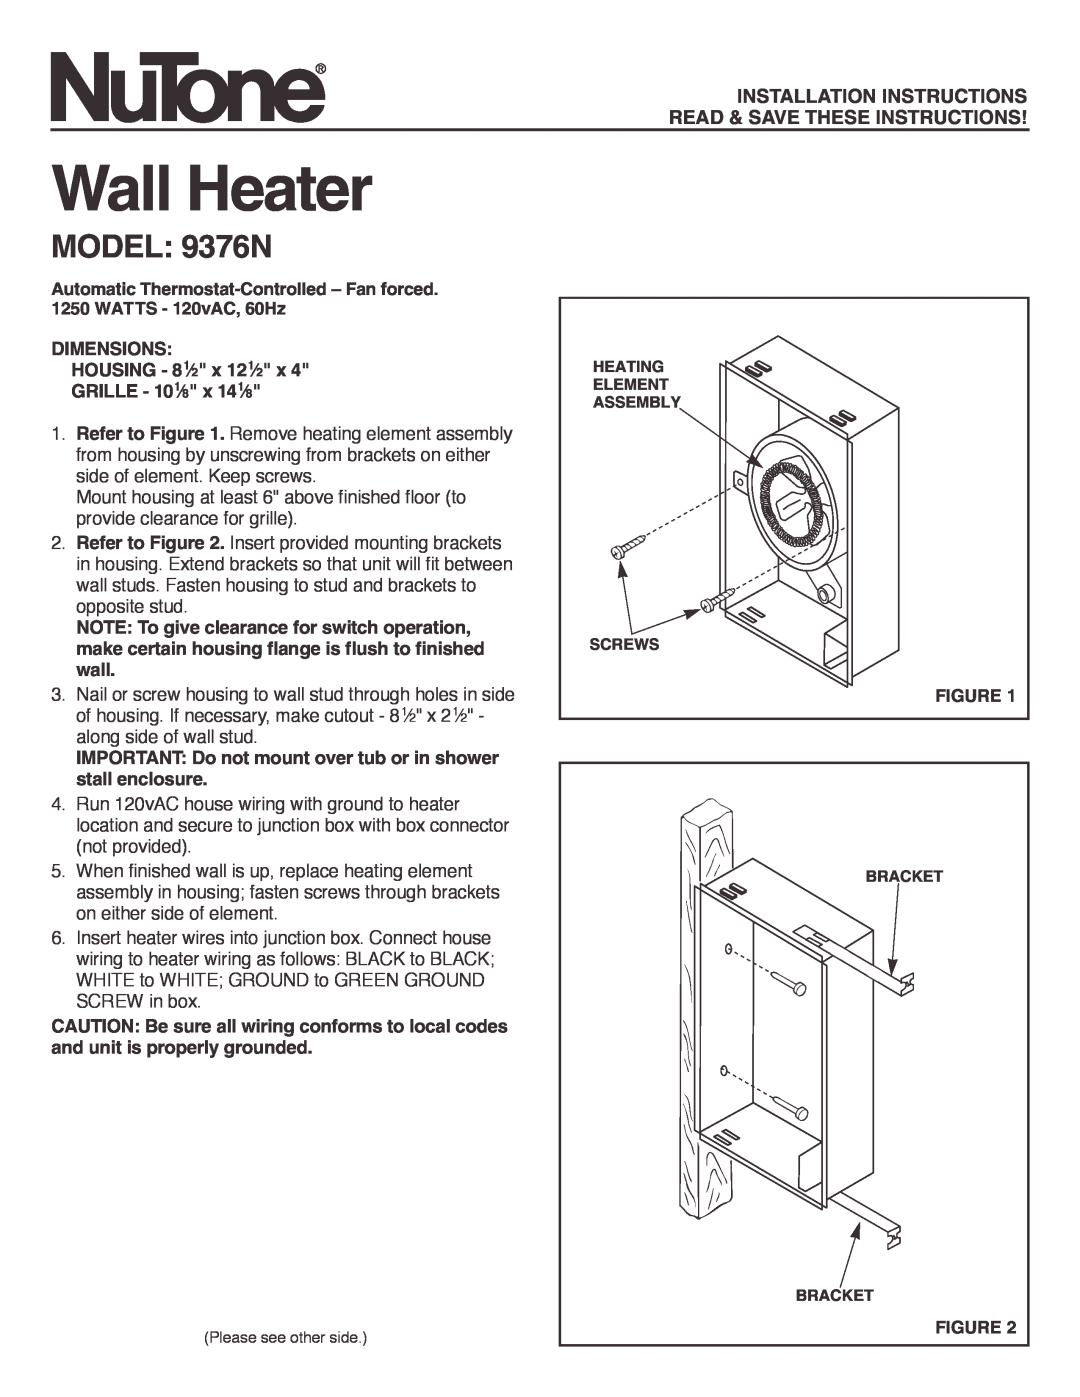 NuTone installation instructions Wall Heater, MODEL 9376N 